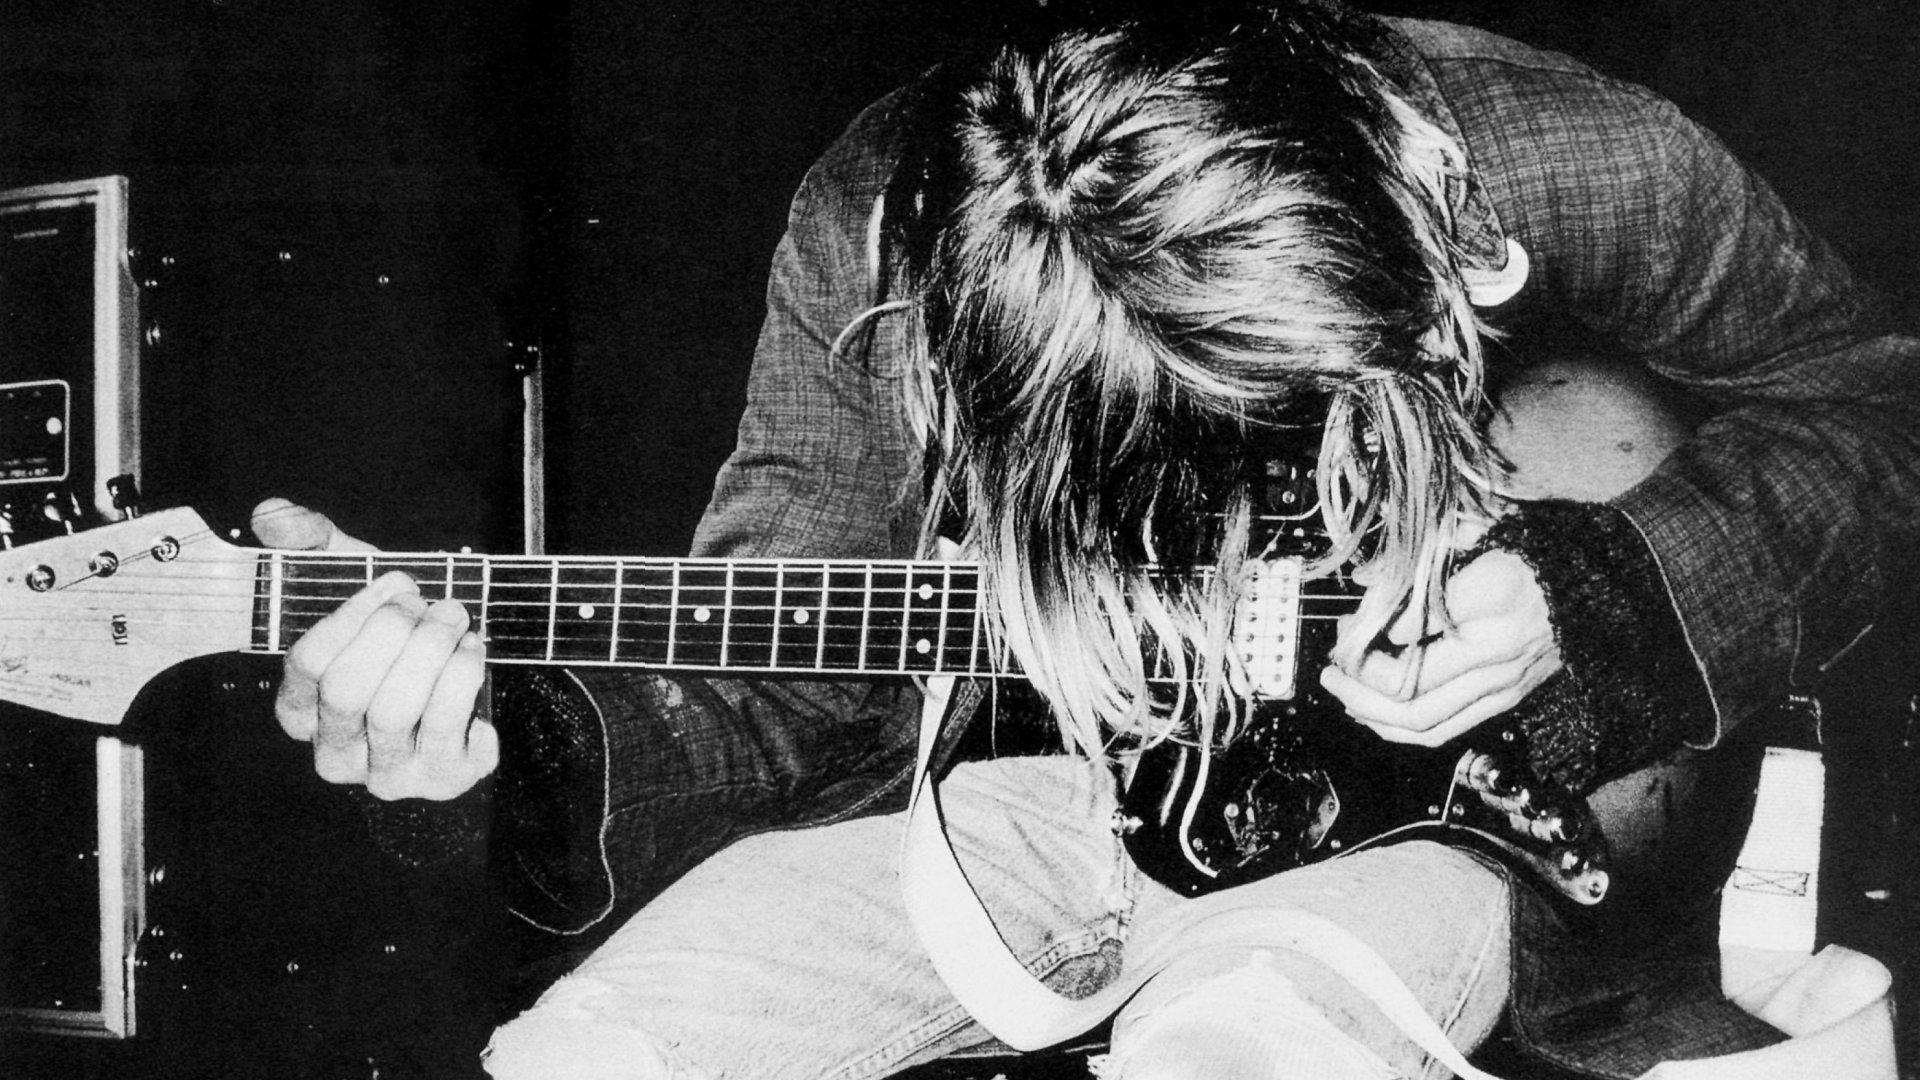 Wallpaper.wiki Music Nirvana Kurt Cobain Image 1920x1080 PIC